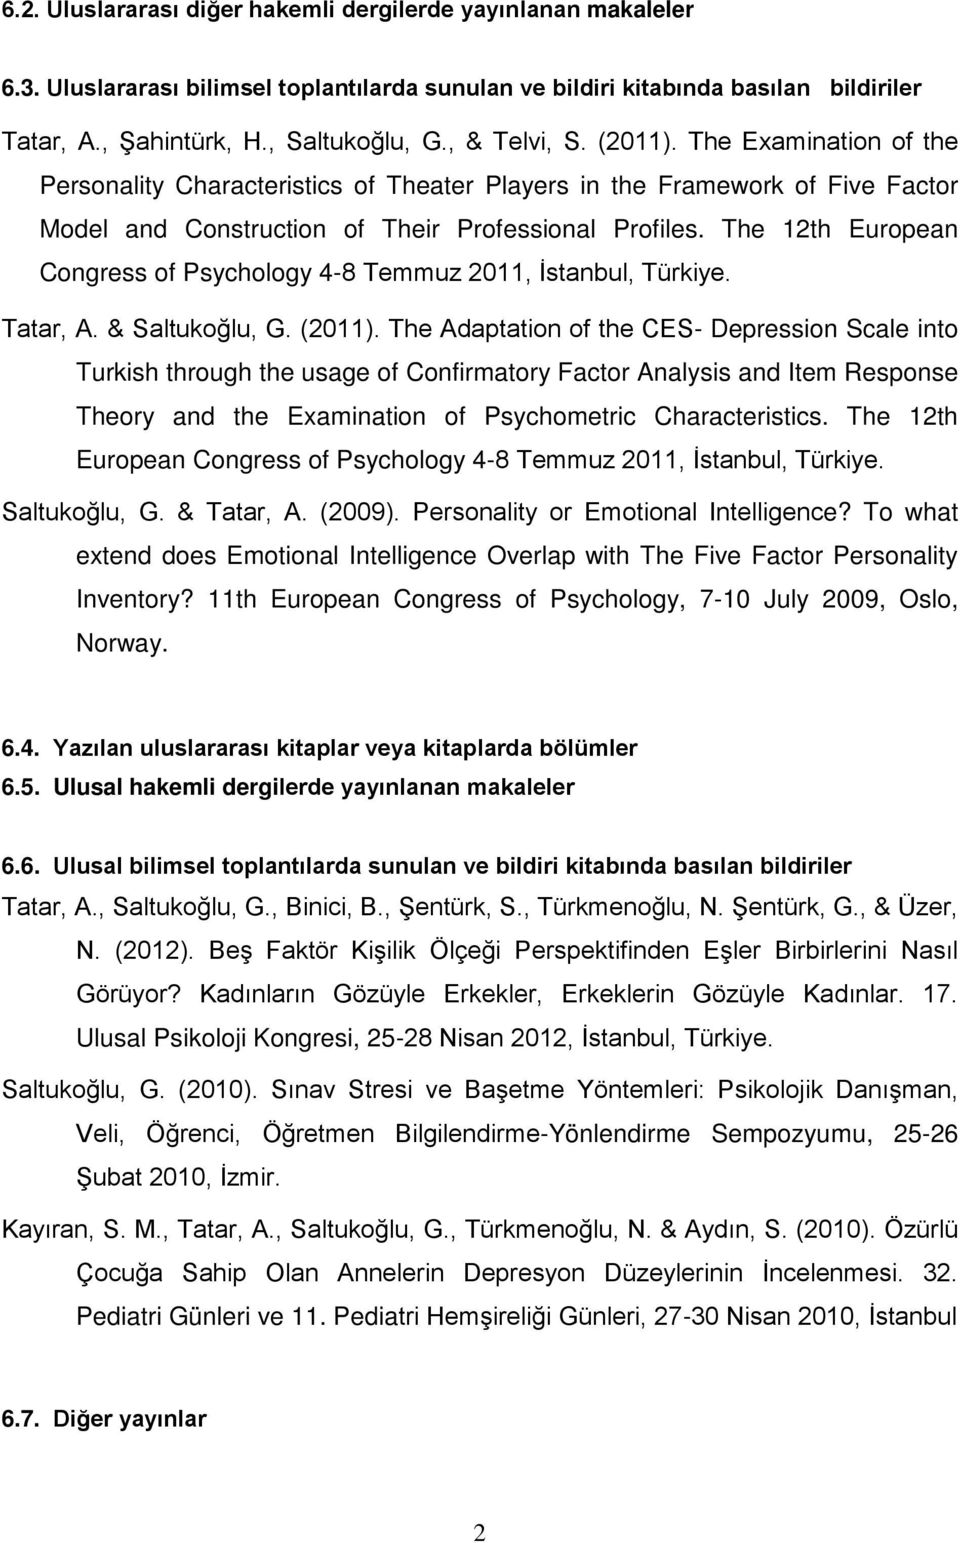 The 12th European Congress of Psychology 4-8 Temmuz 2011, İstanbul, Türkiye. Tatar, A. & Saltukoğlu, G. (2011).